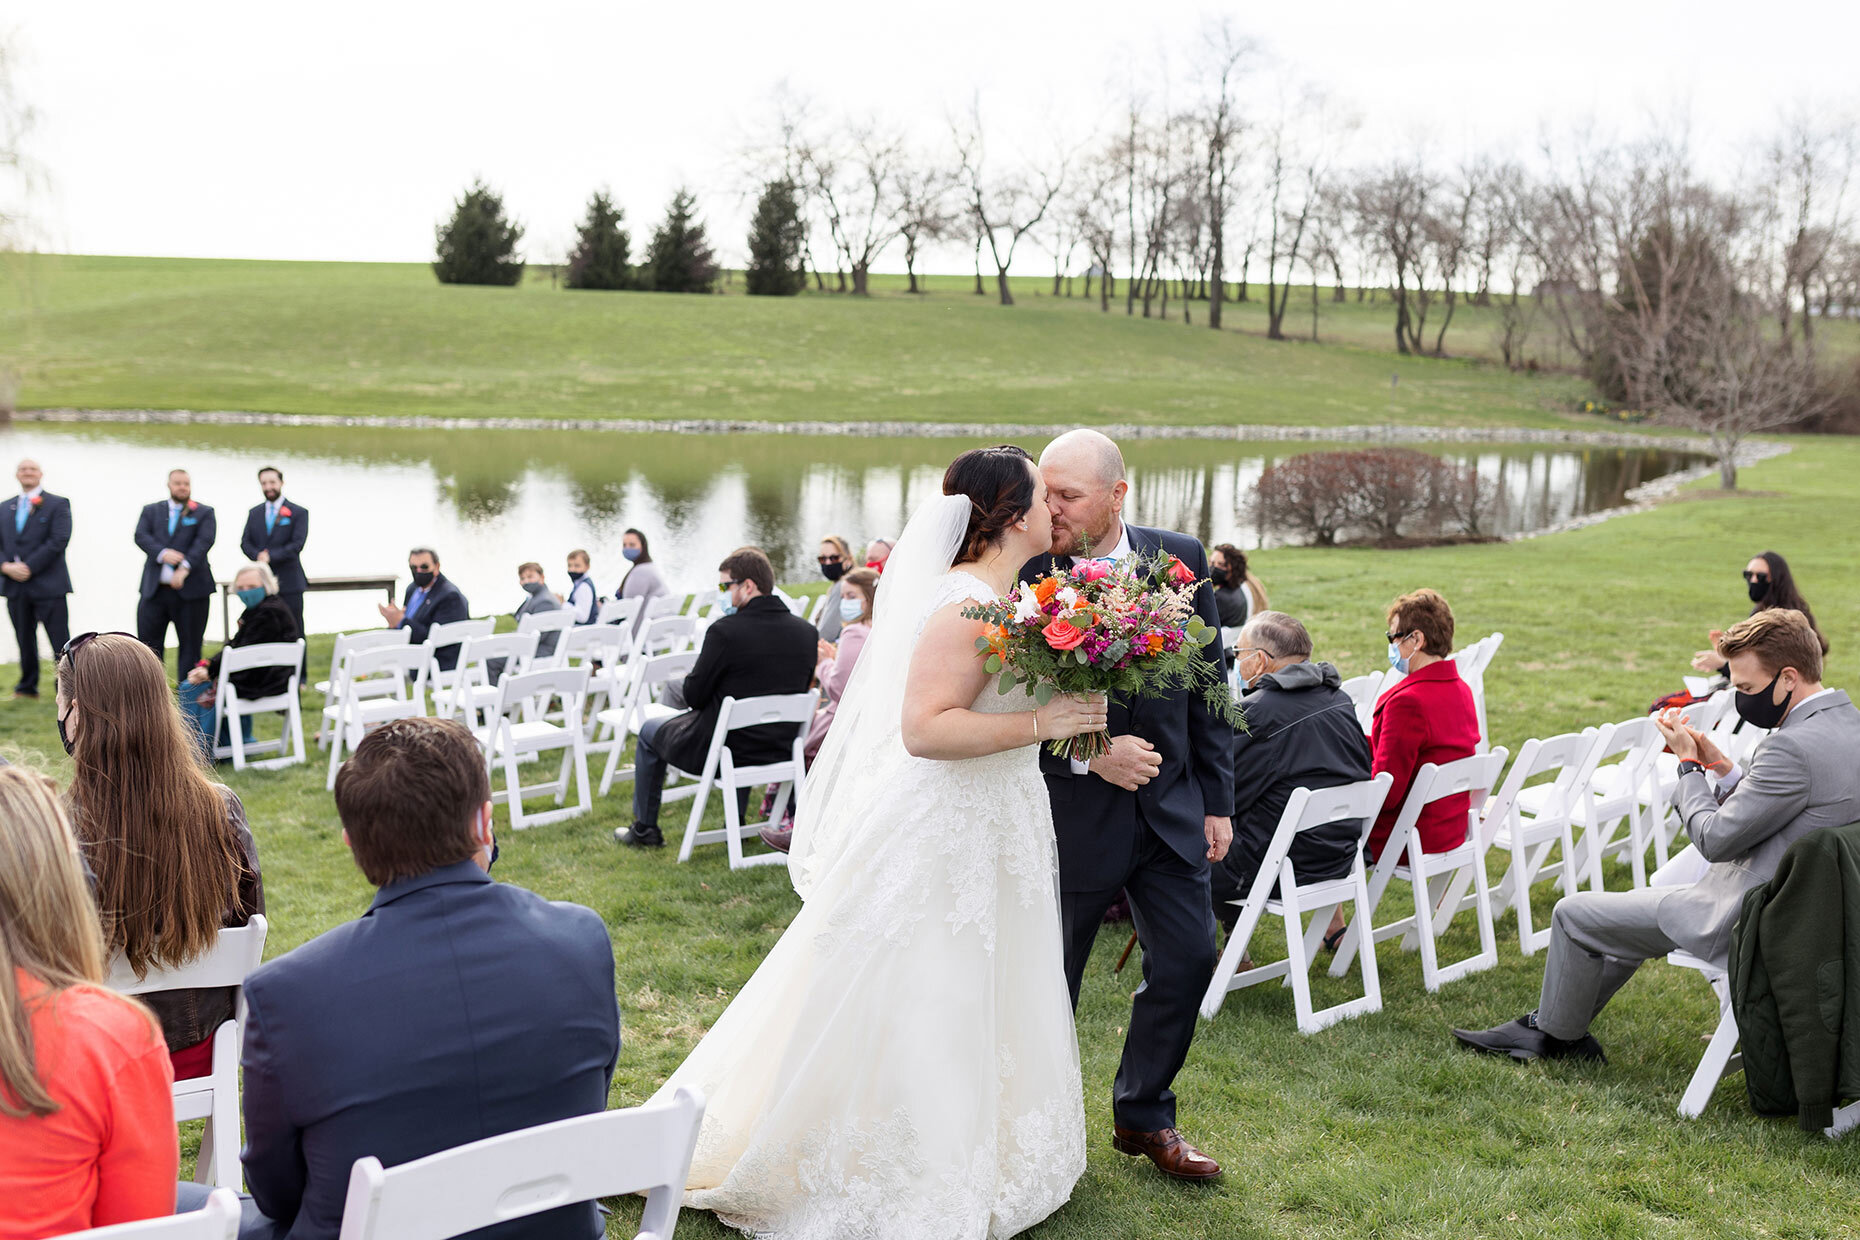 Bride and groom kiss at recessional at Lakefield Weddings, Manheim, PA 